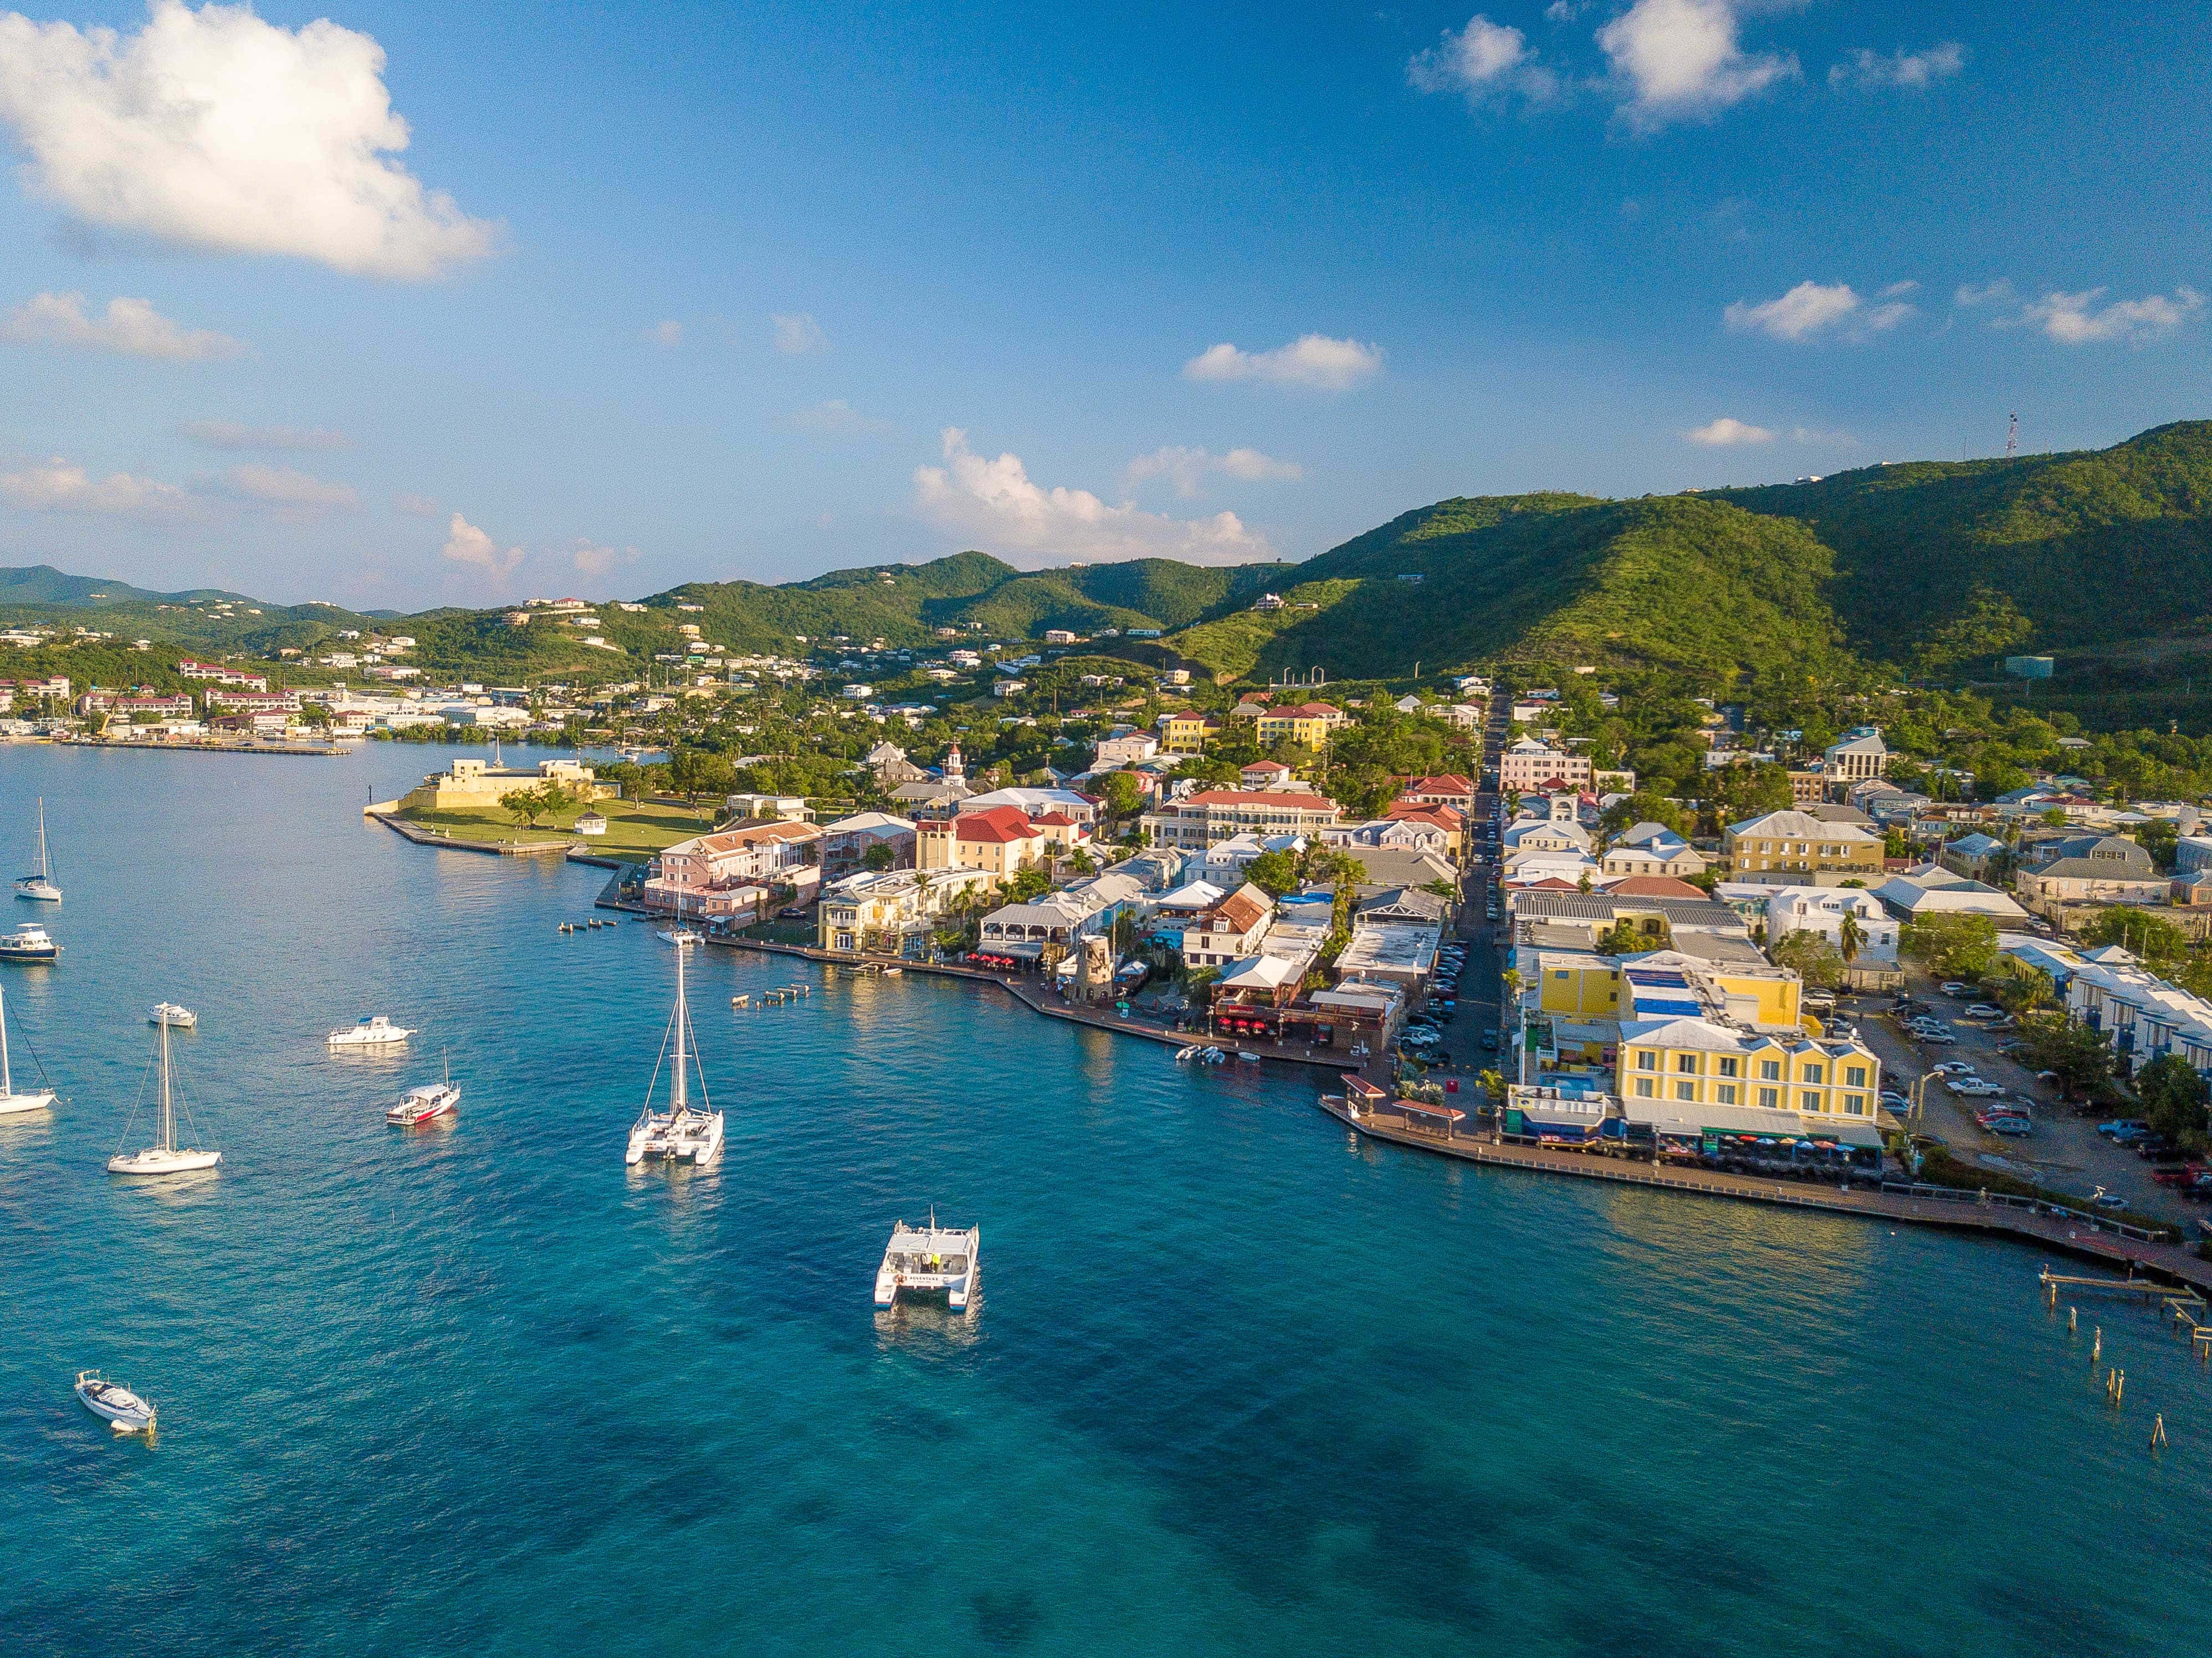 St. Croix by Patrick Bennett